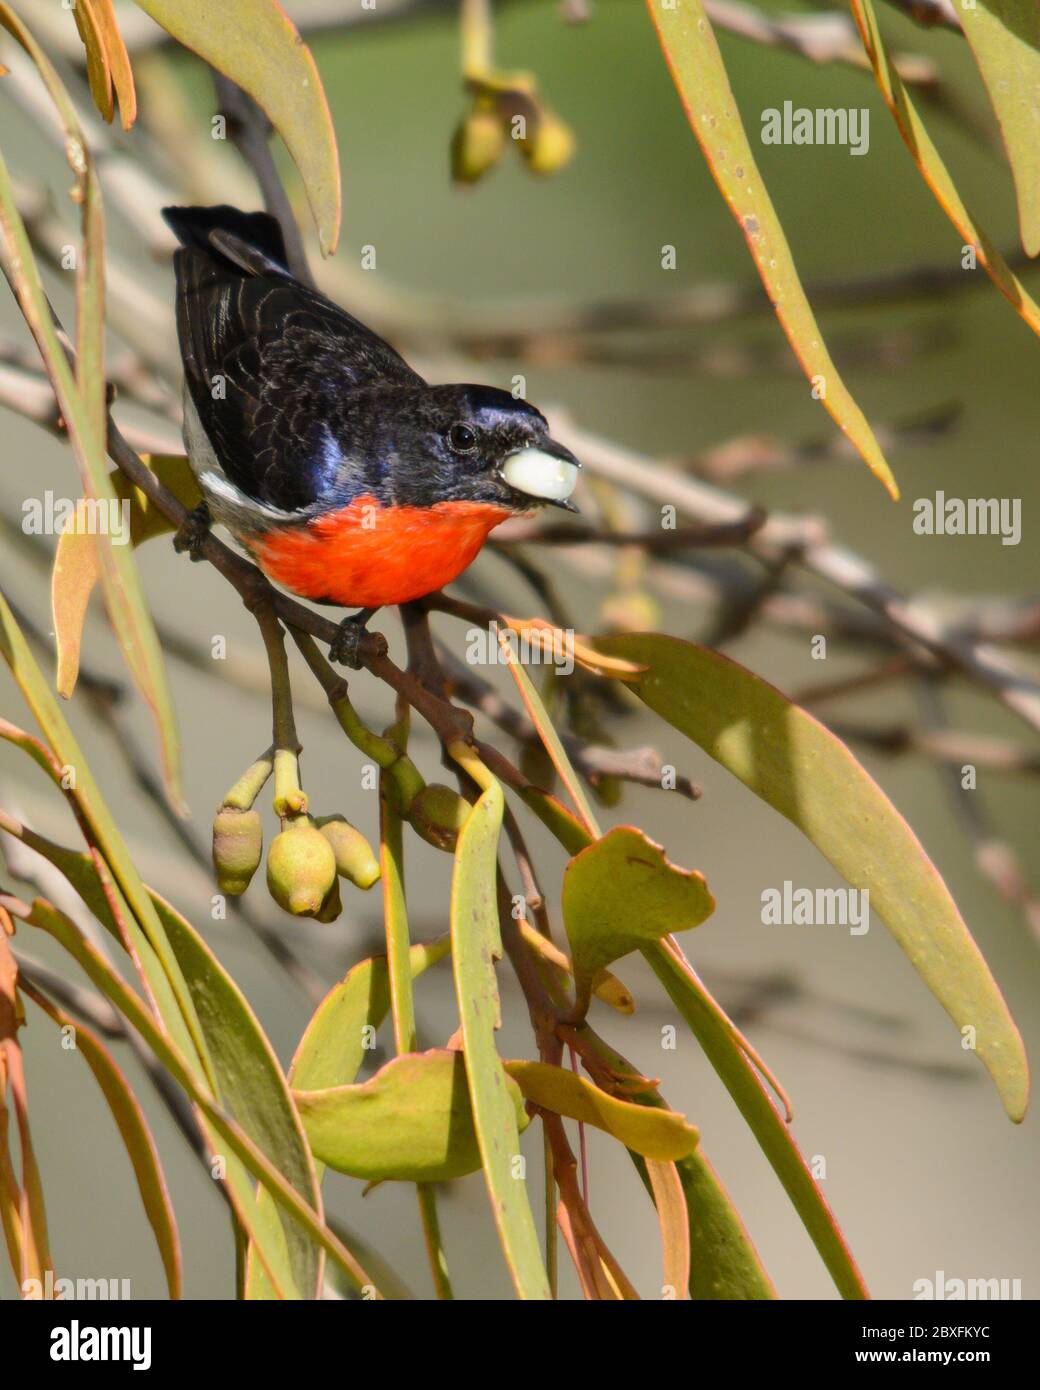 Mistletoebird swallowing a berry from Drooping Mistletoe. Stock Photo